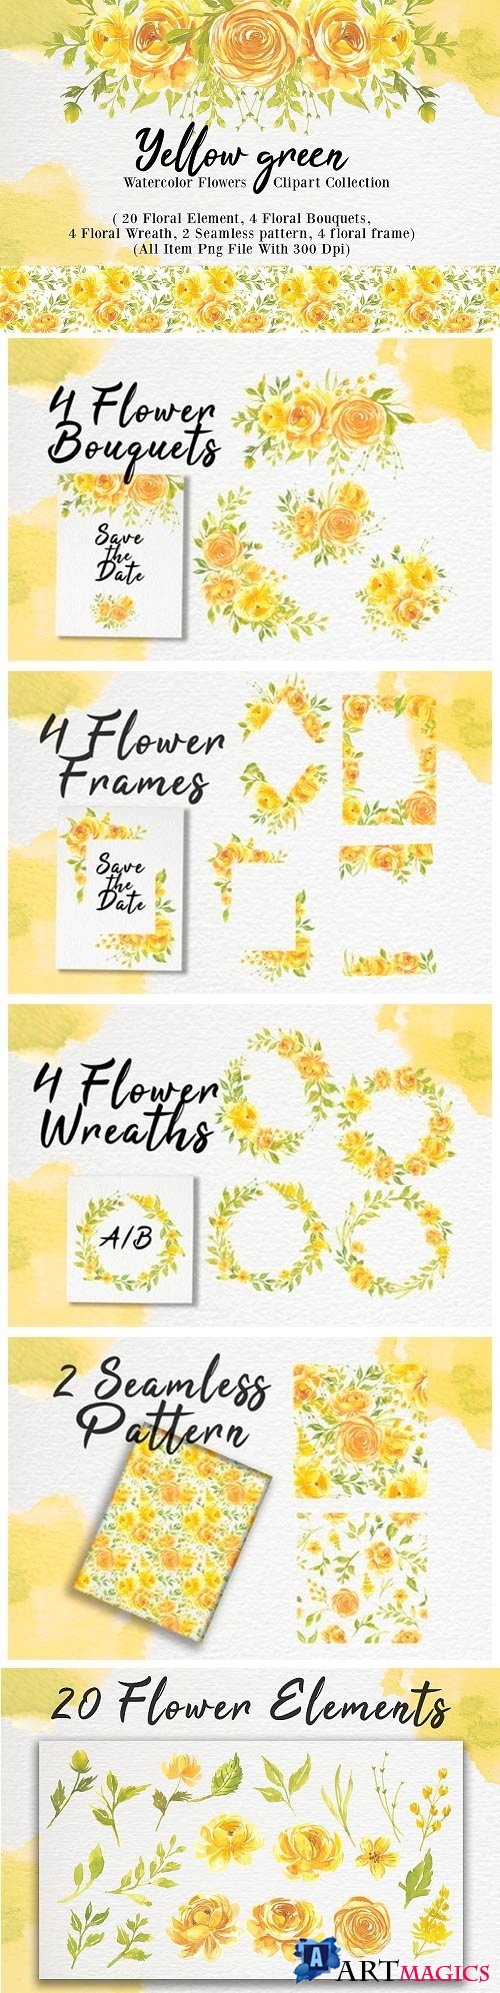 Yellow flower watercolor clip-art - 367360